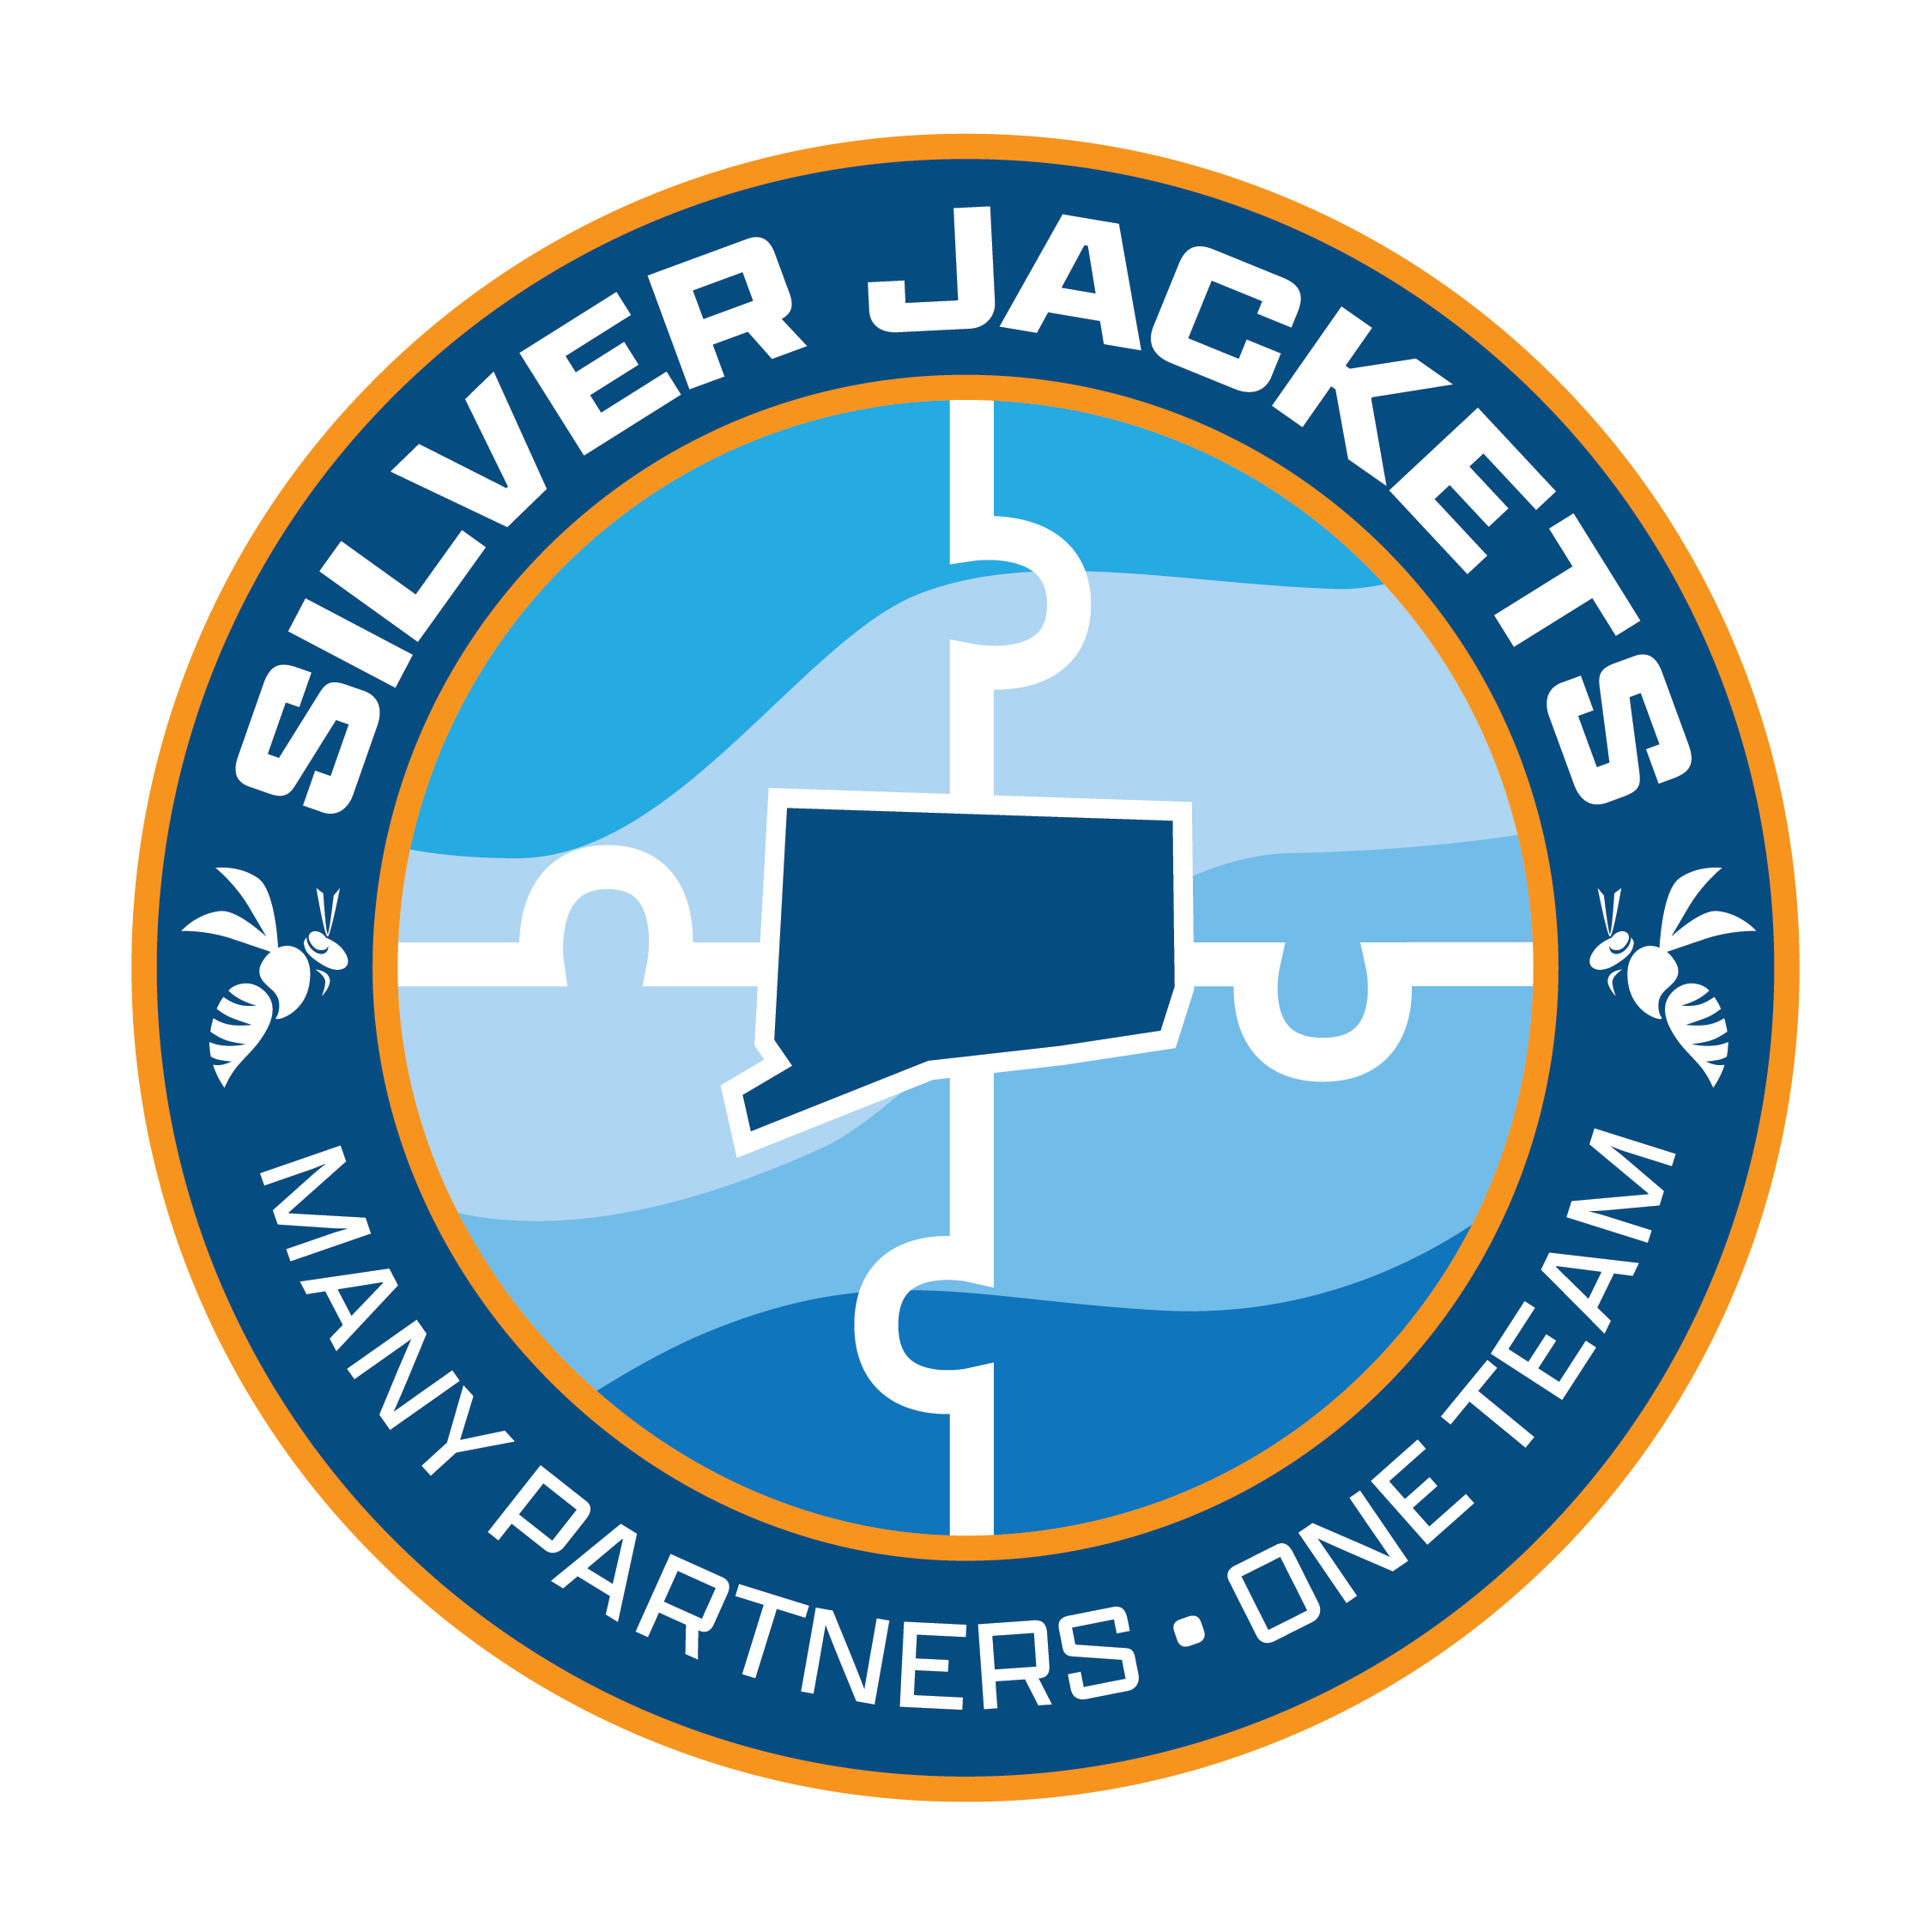 Connecticut Silver Jackets logo